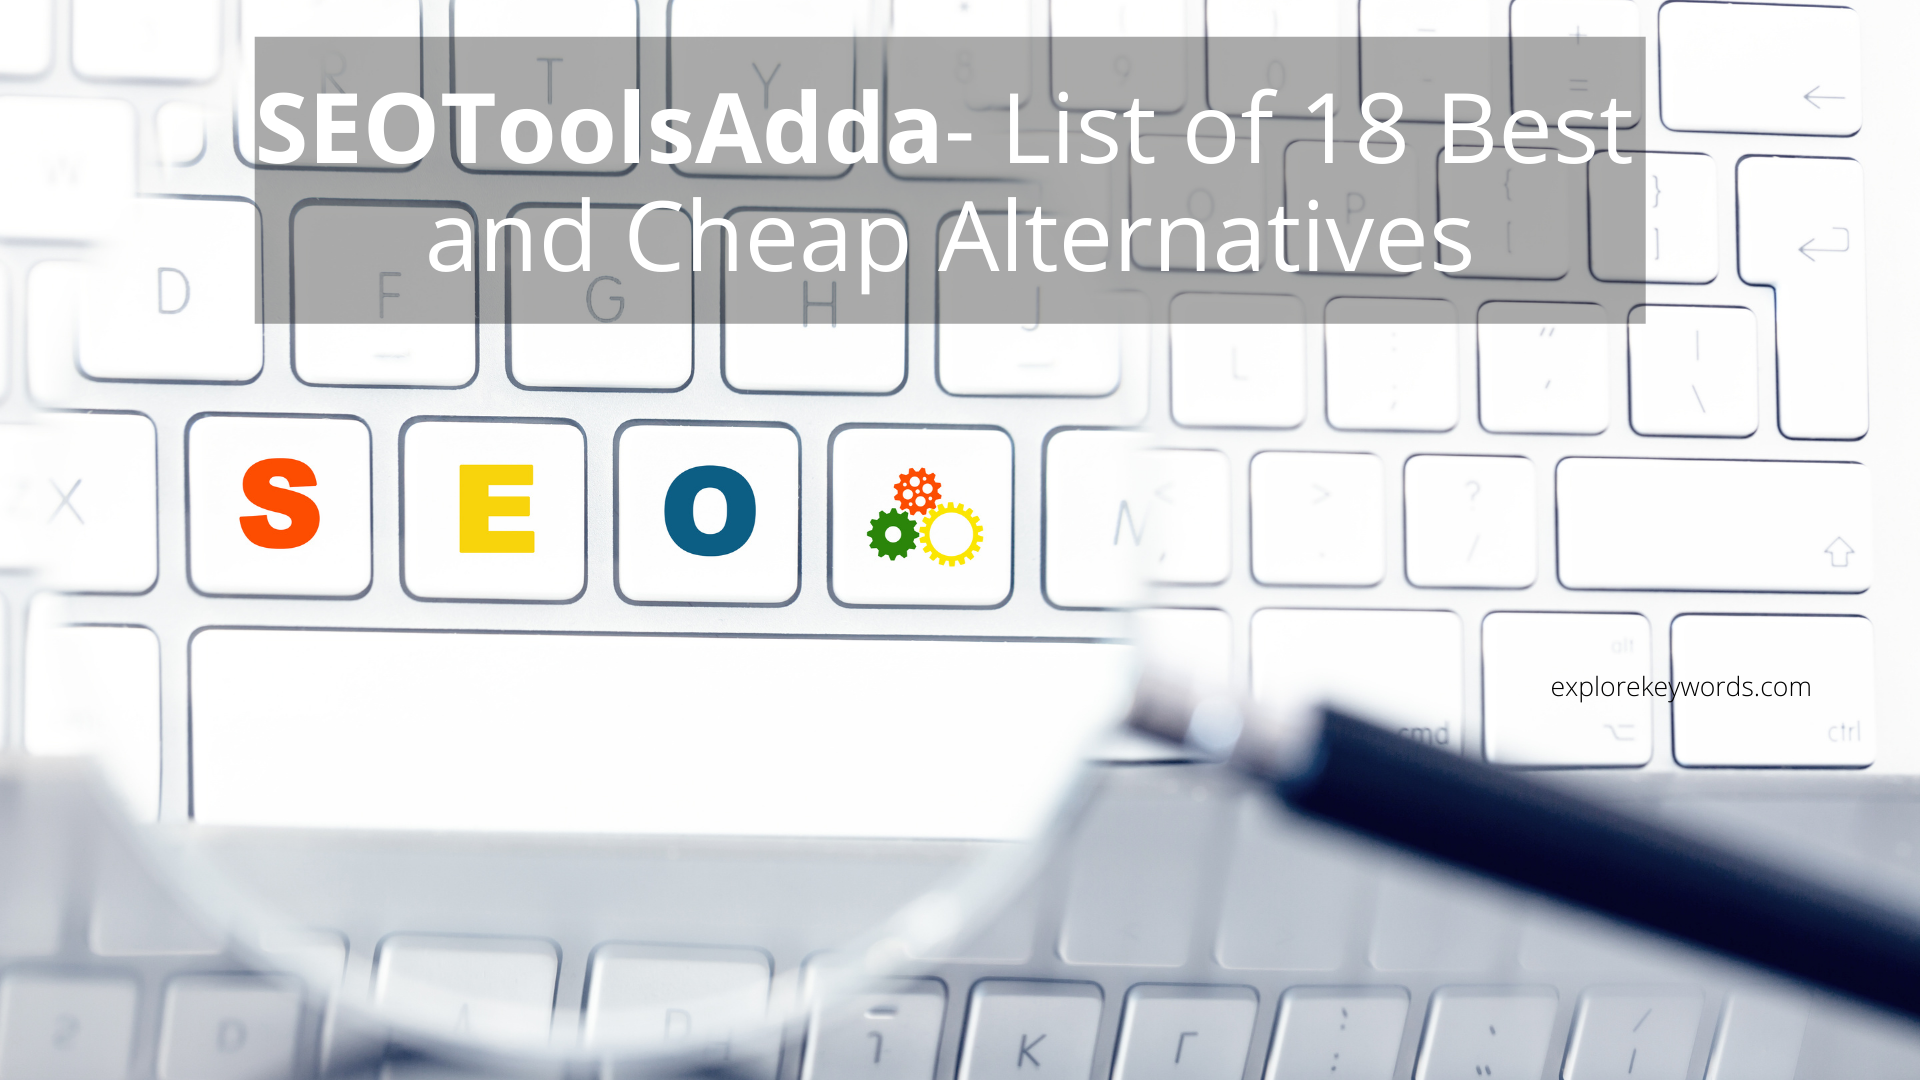 SEOToolsAdda- List of 18 Best and Cheap Alternatives